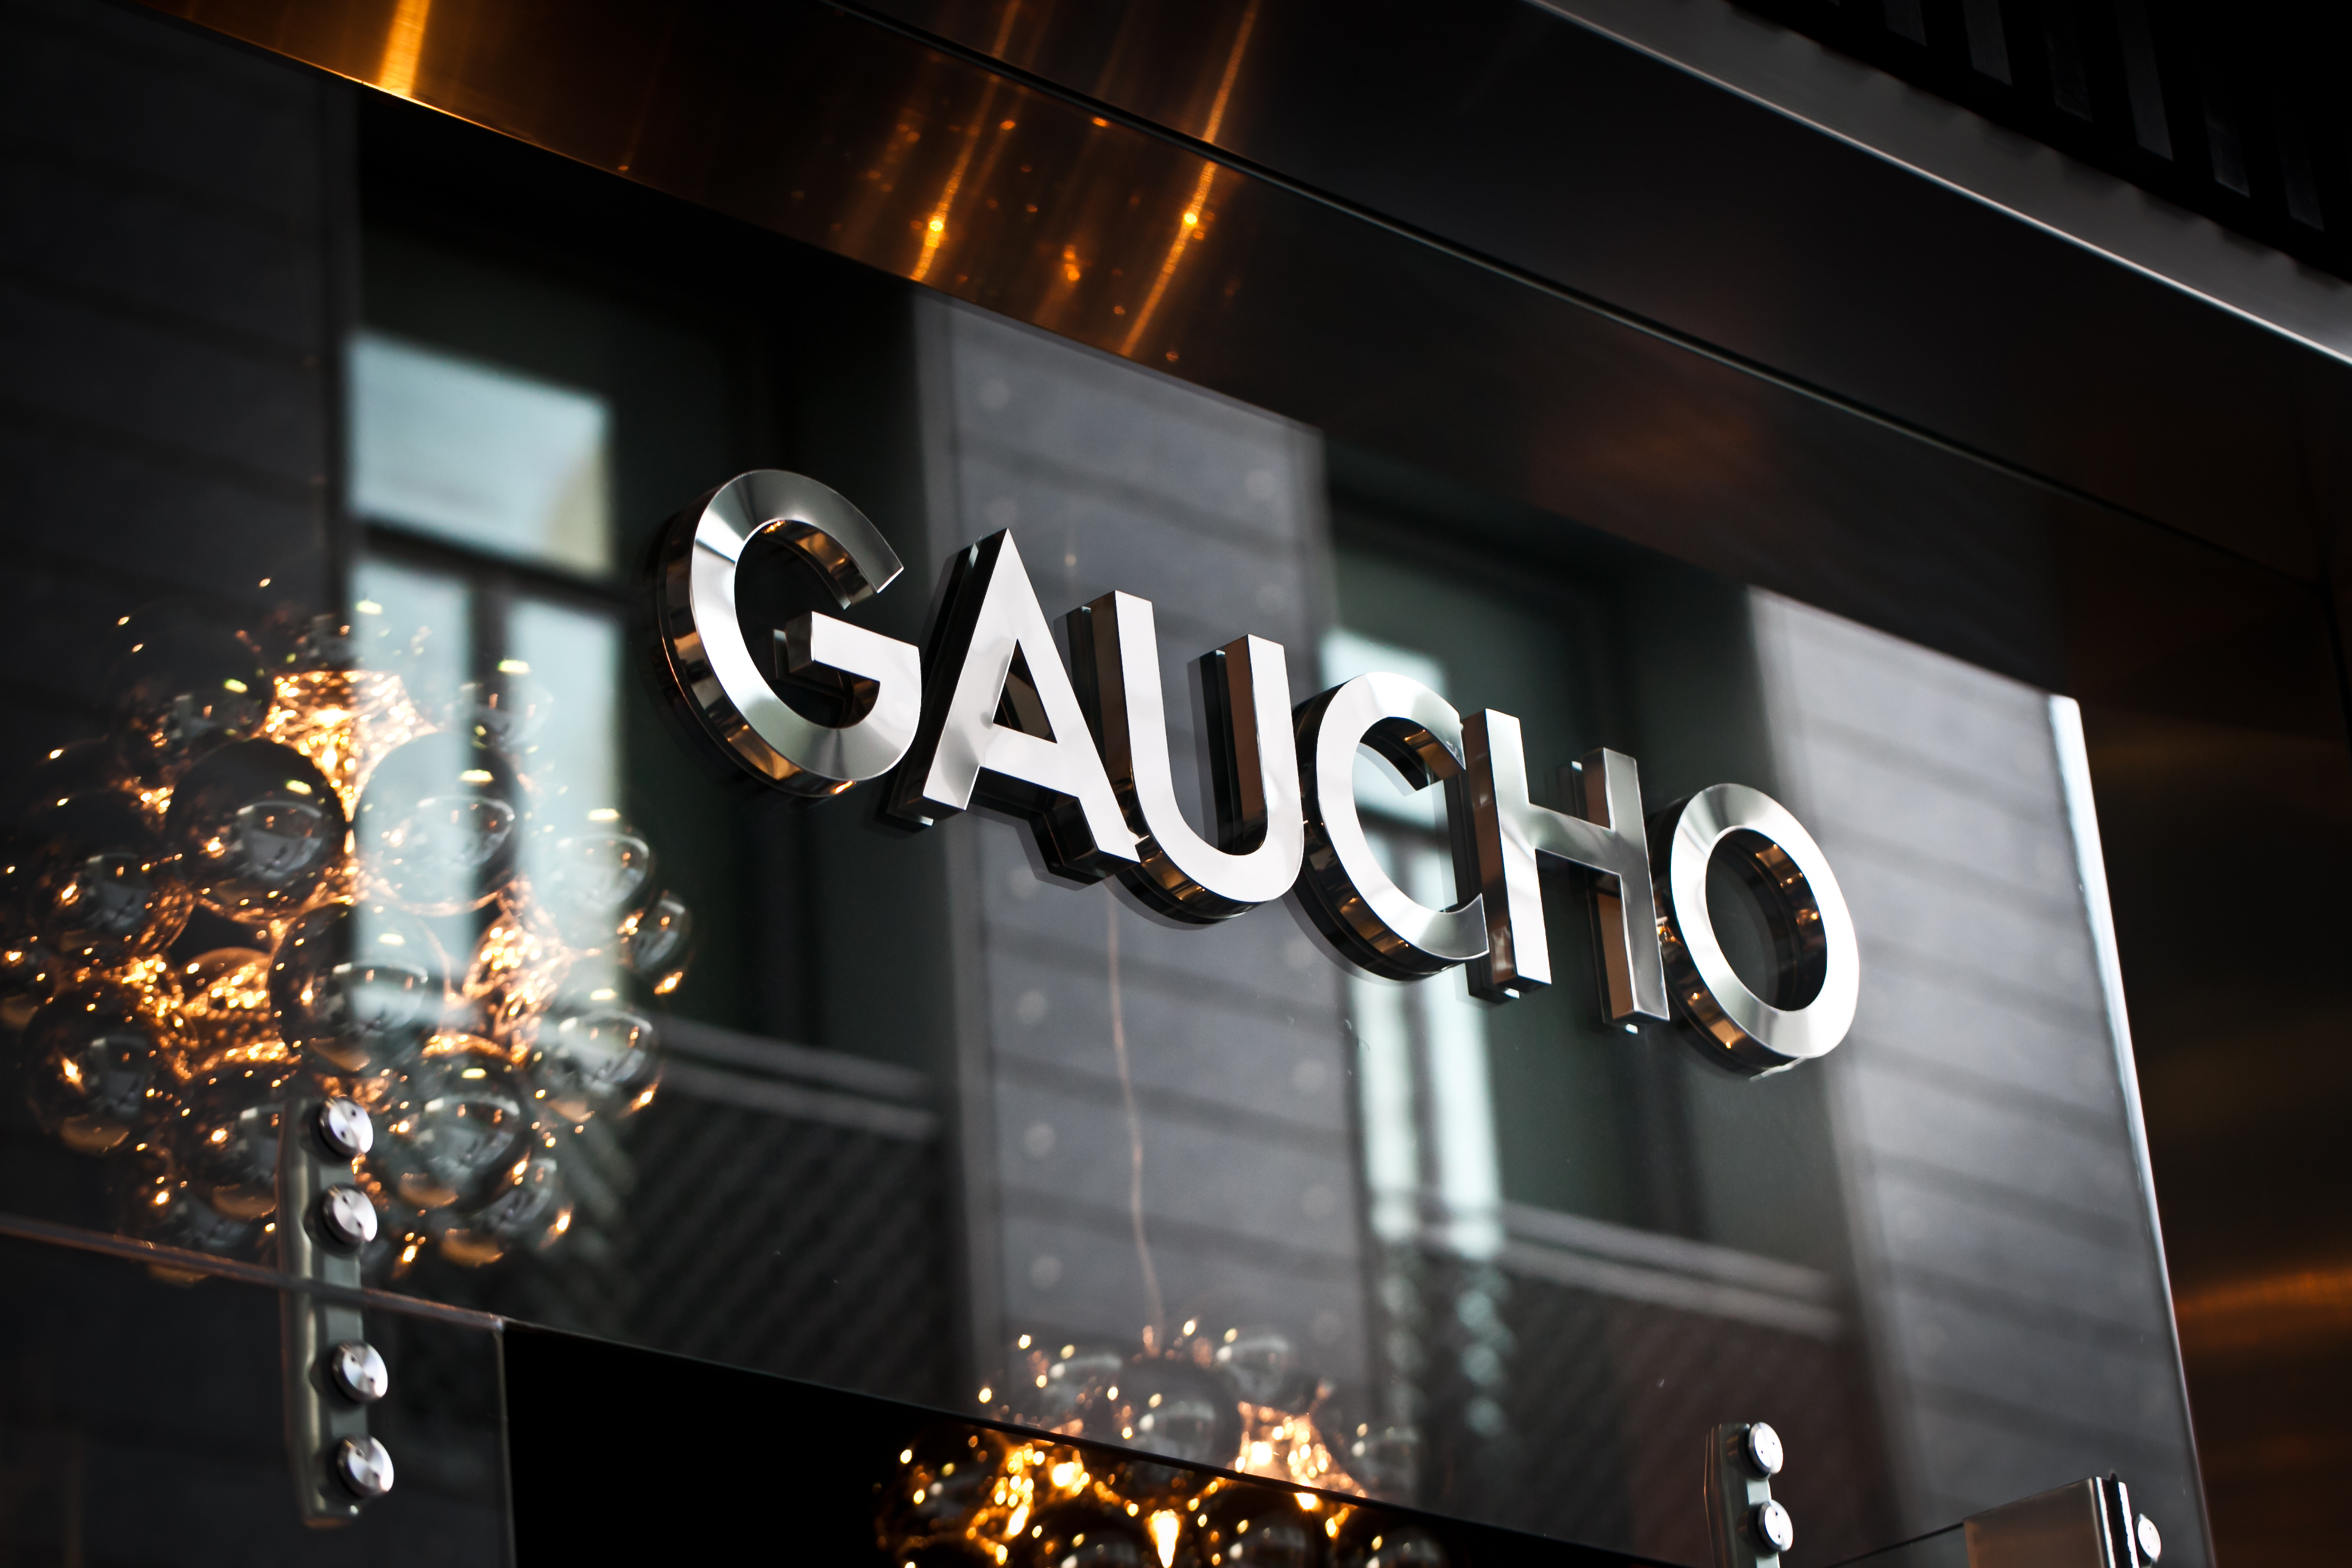 Gaucho sign